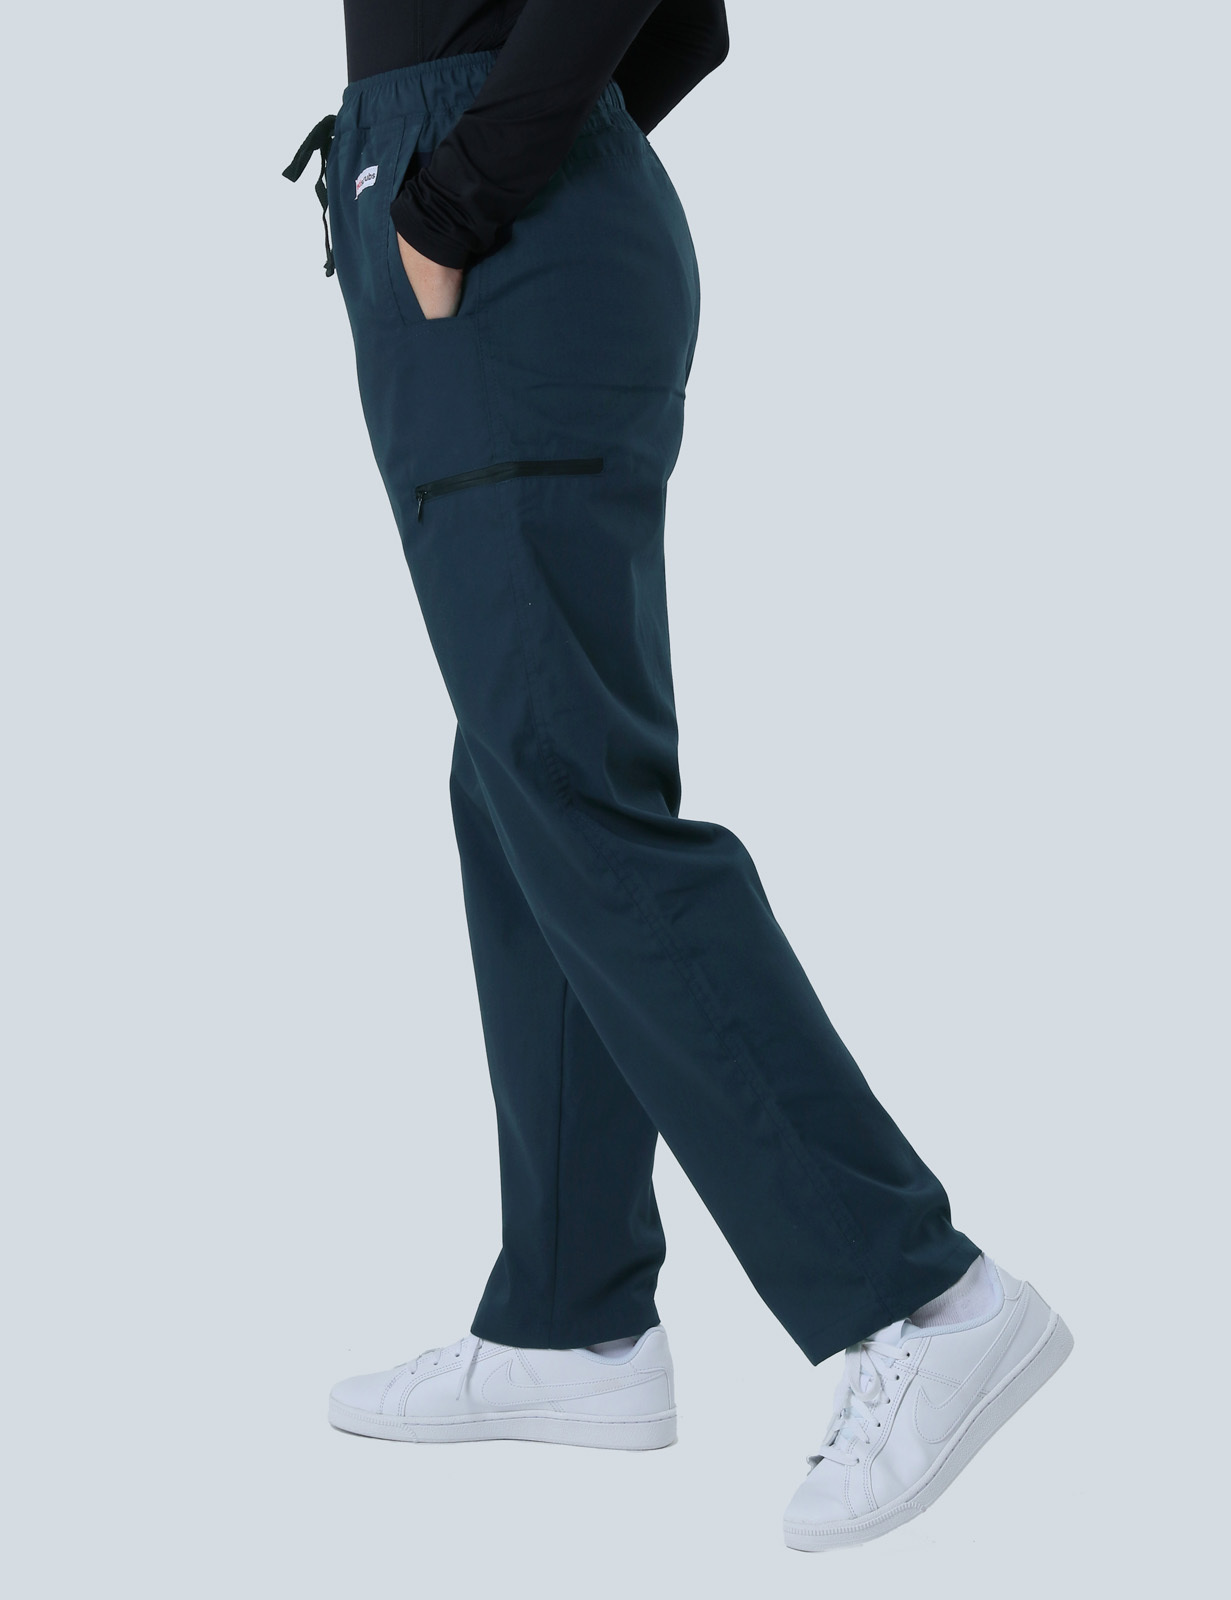 Women's Utility Pants - Navy - X Small - Tall - 0